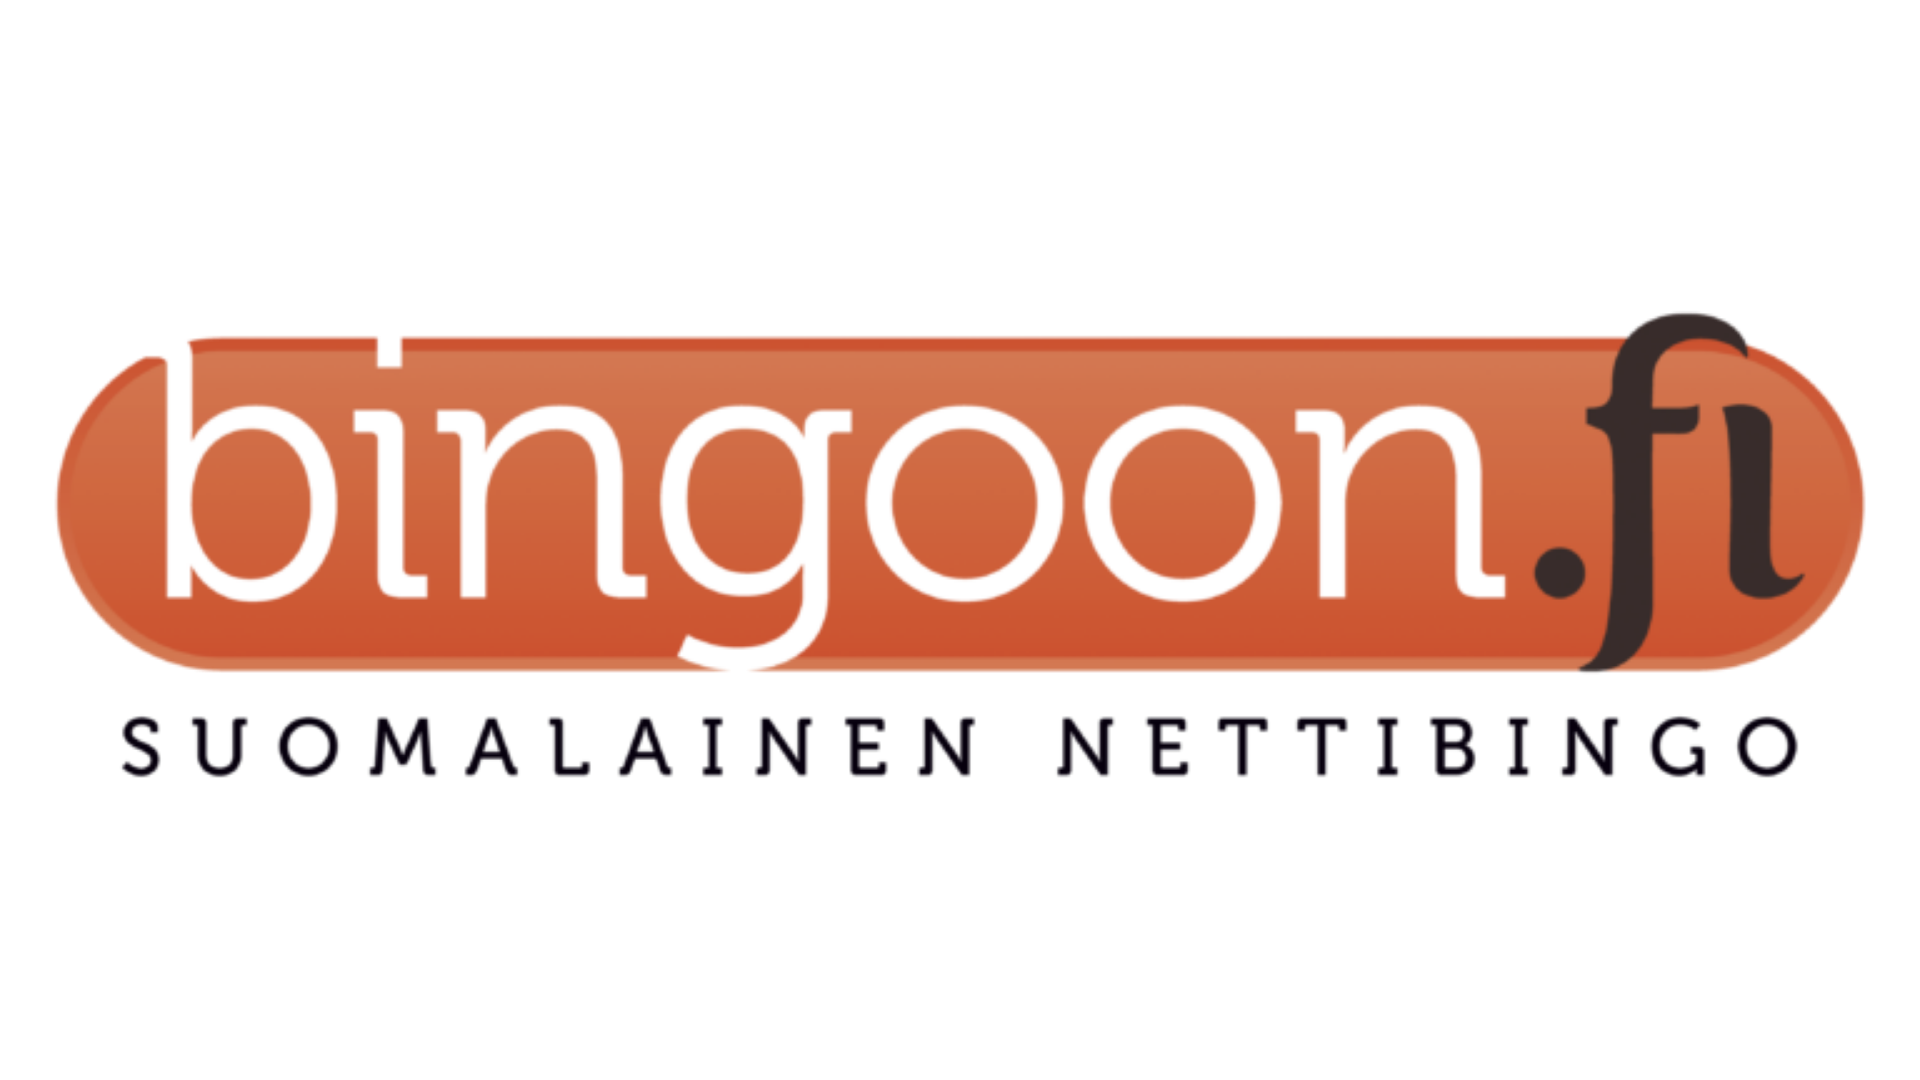 Bingoon logo